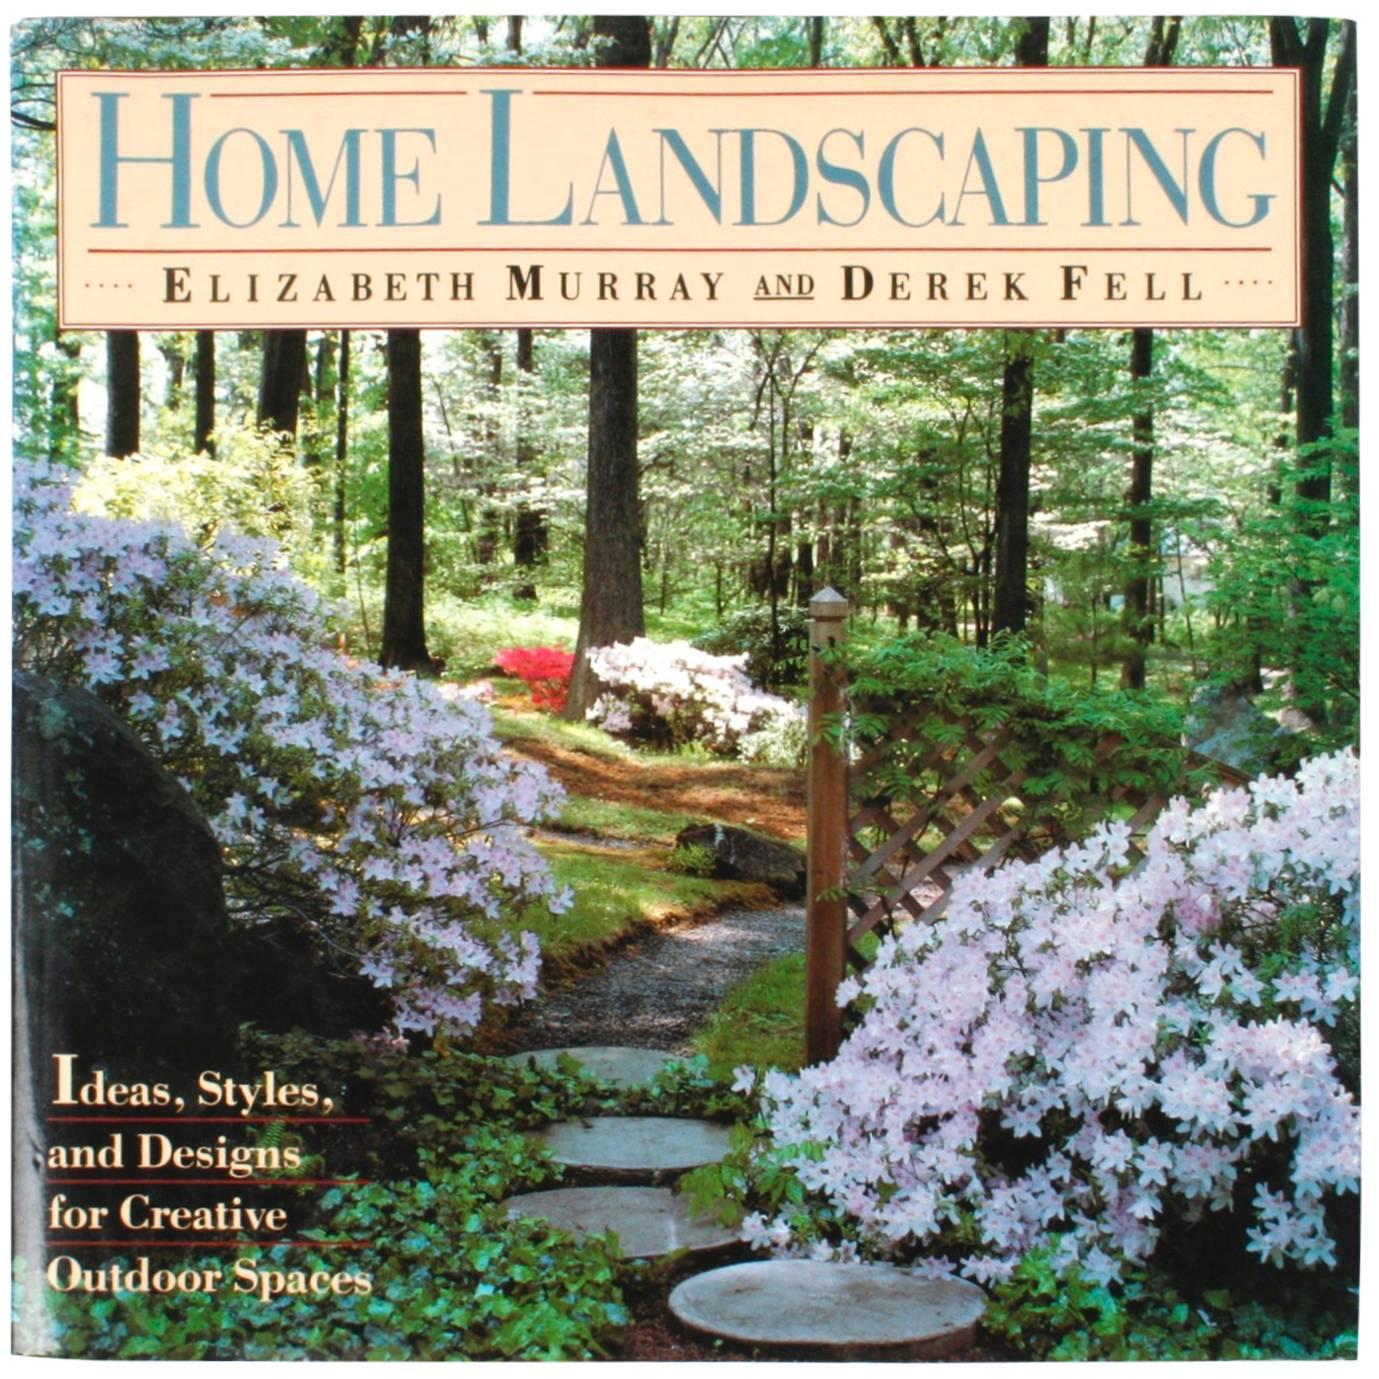 Home Landscaping by Elizabeth Murray and Derek Fell